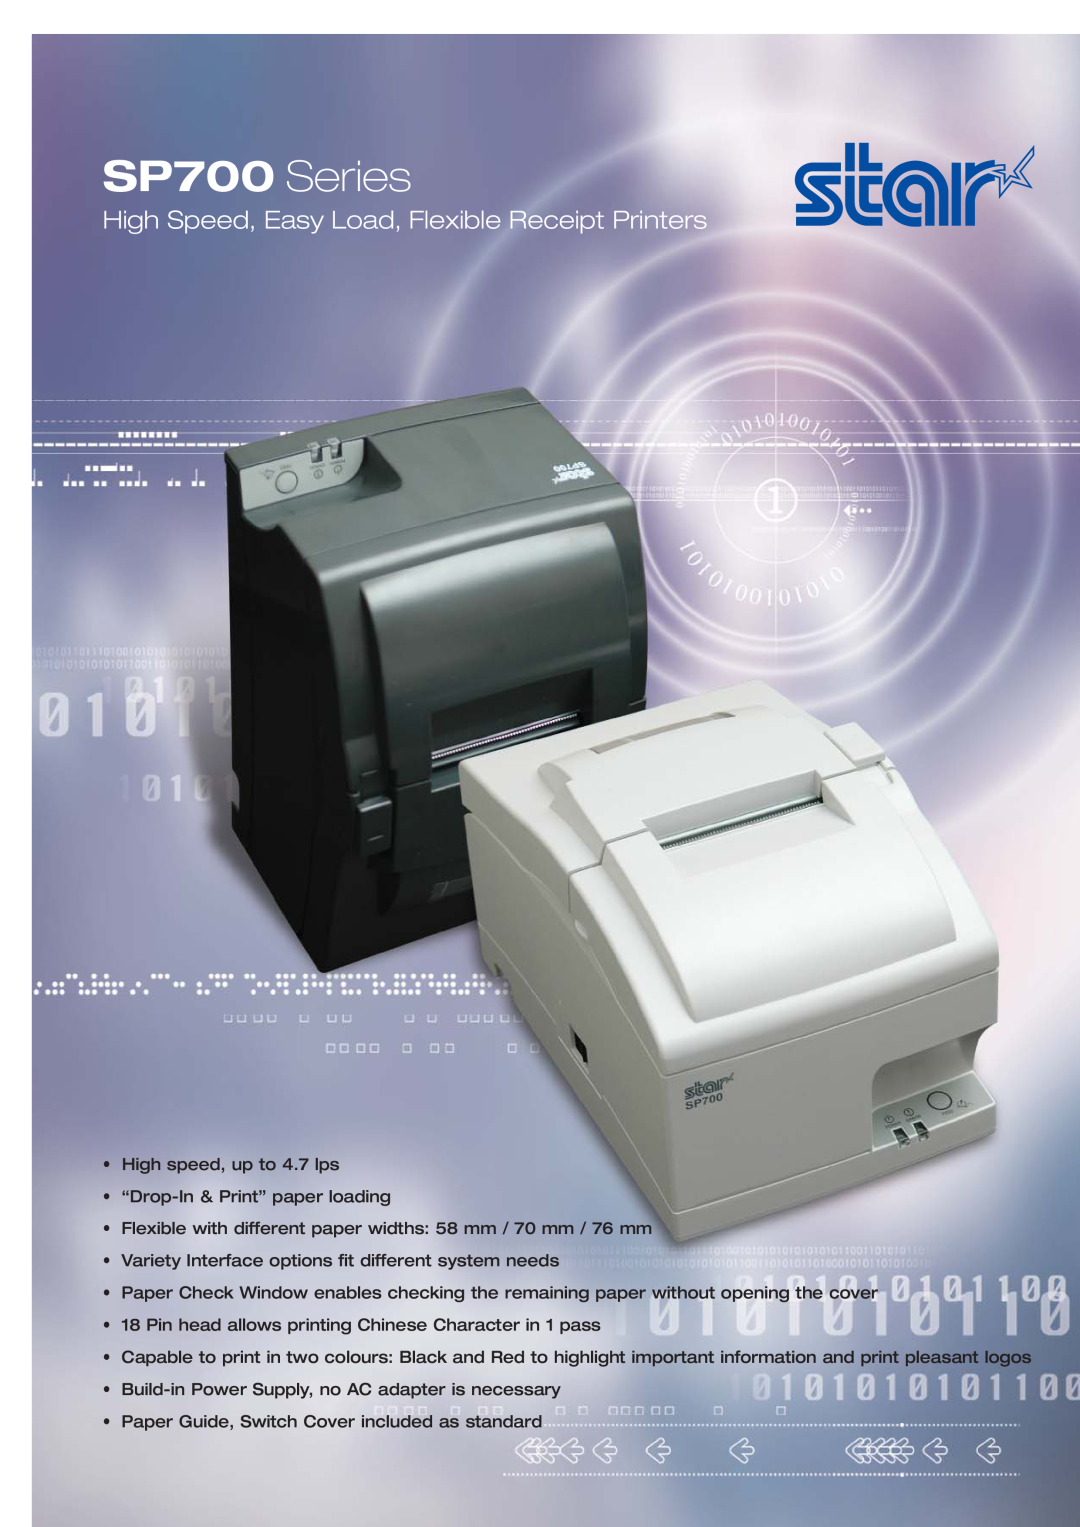 Star Micronics SP700 Series manual High Speed, Easy Load, Flexible Receipt Printers 